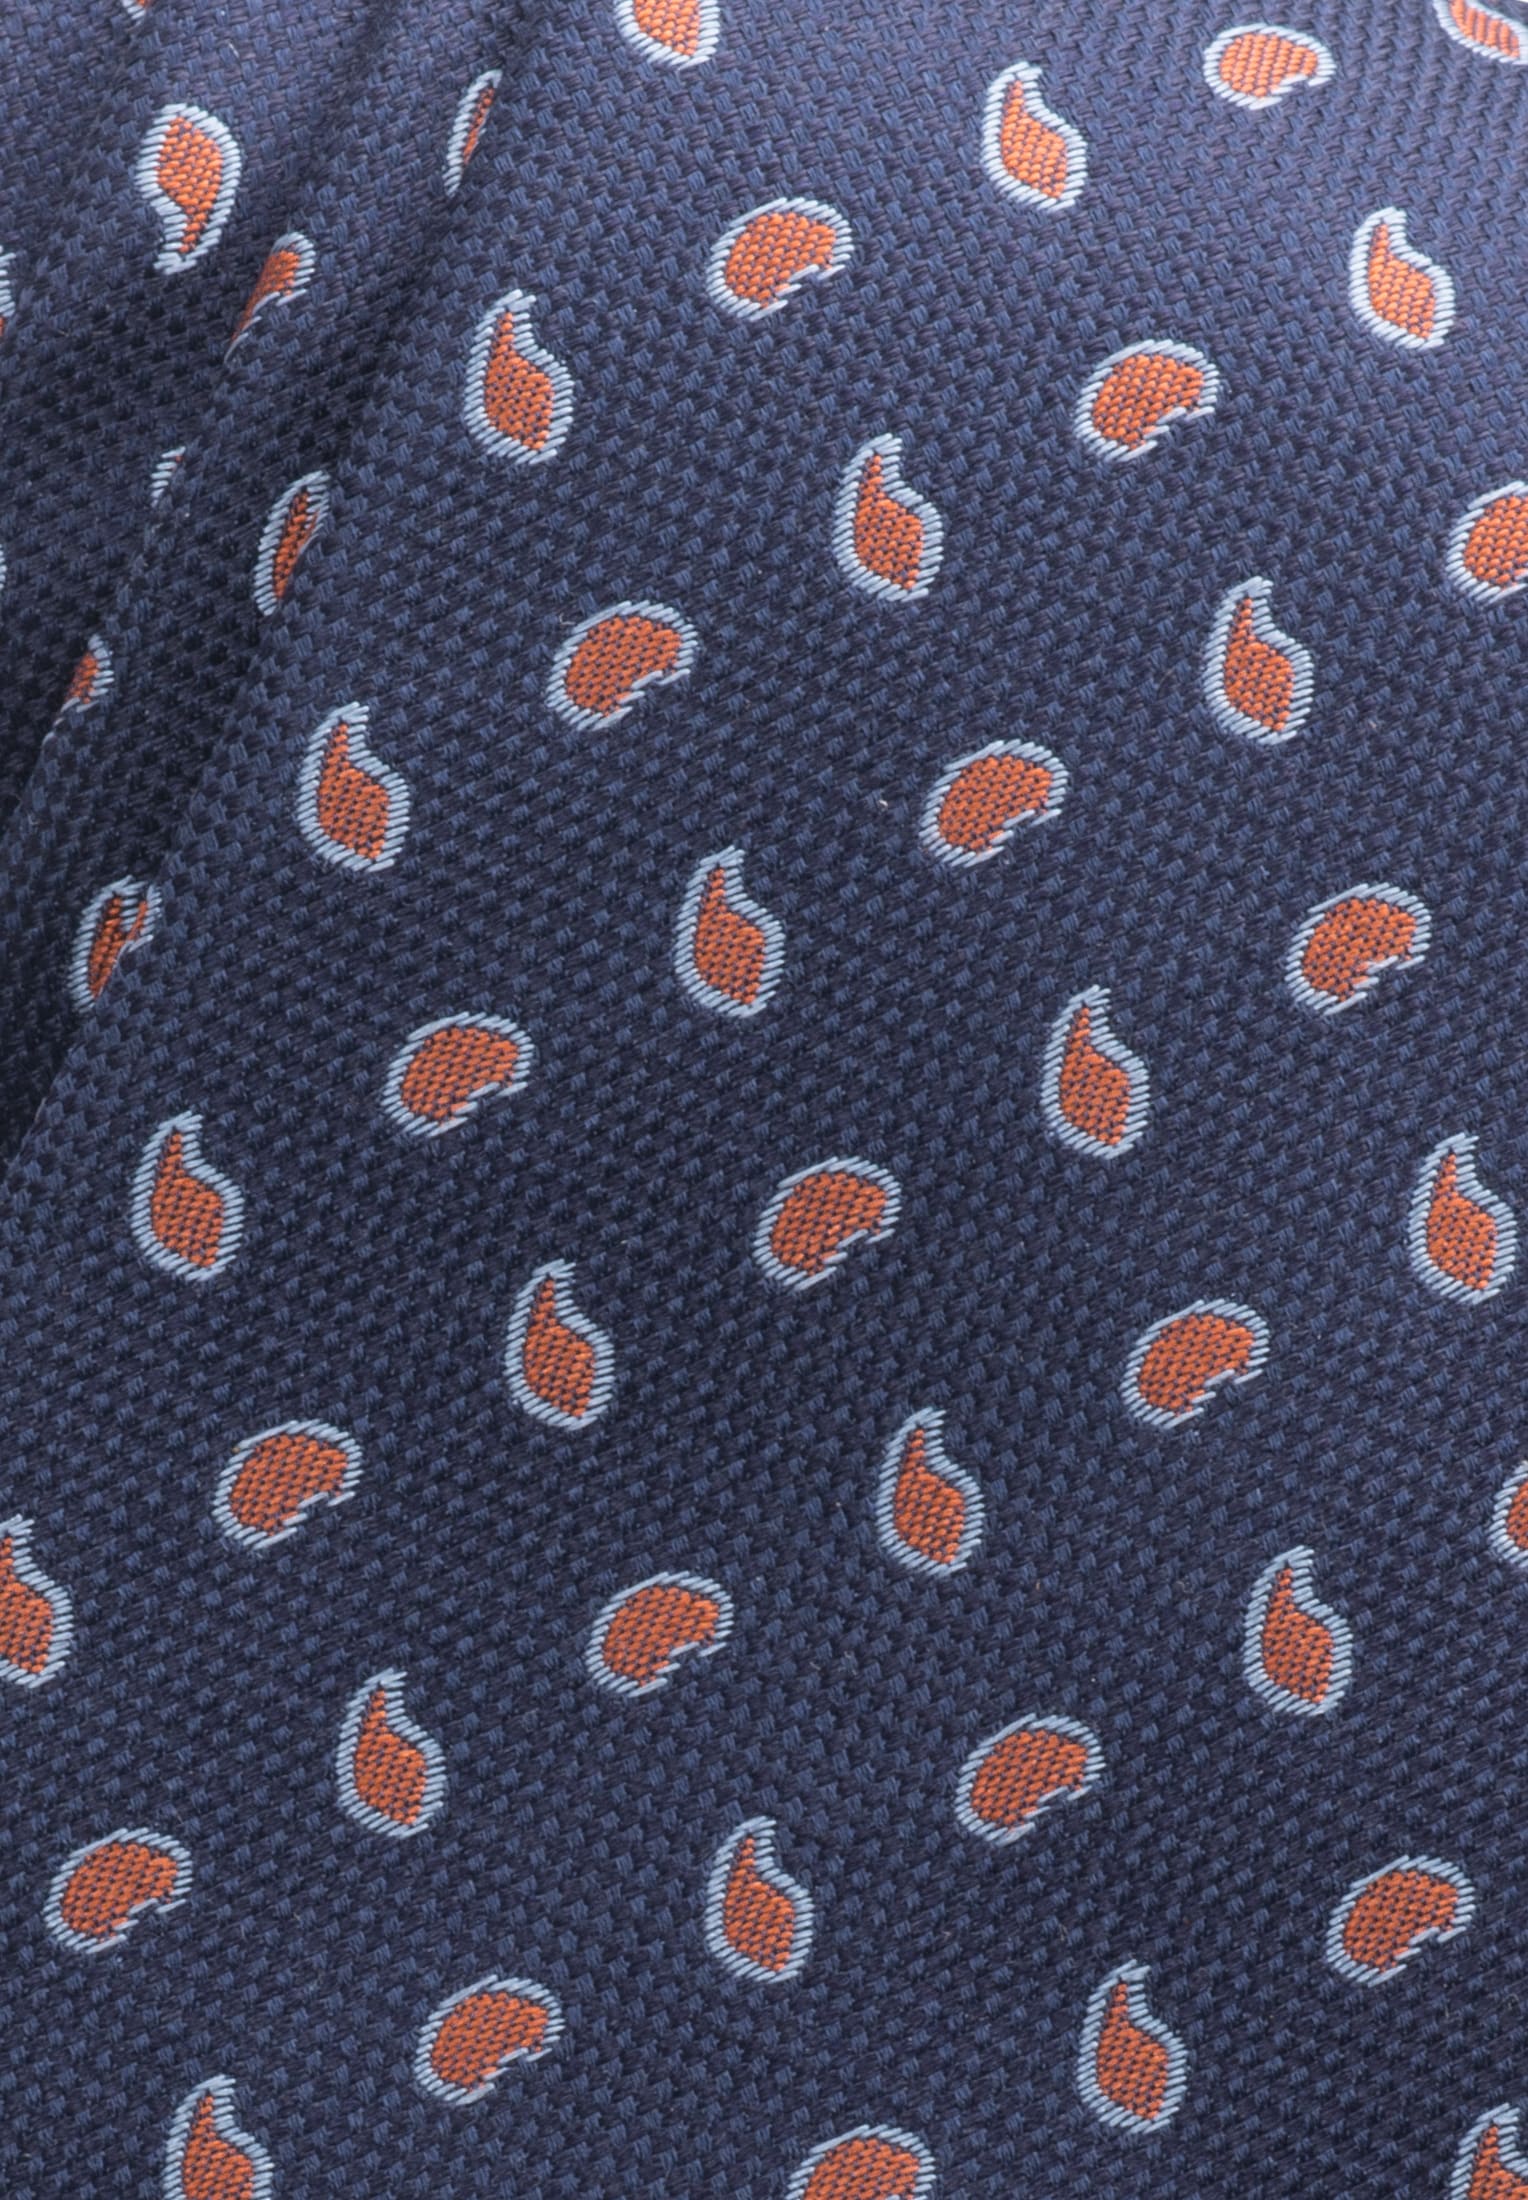 Tie in orange patterned